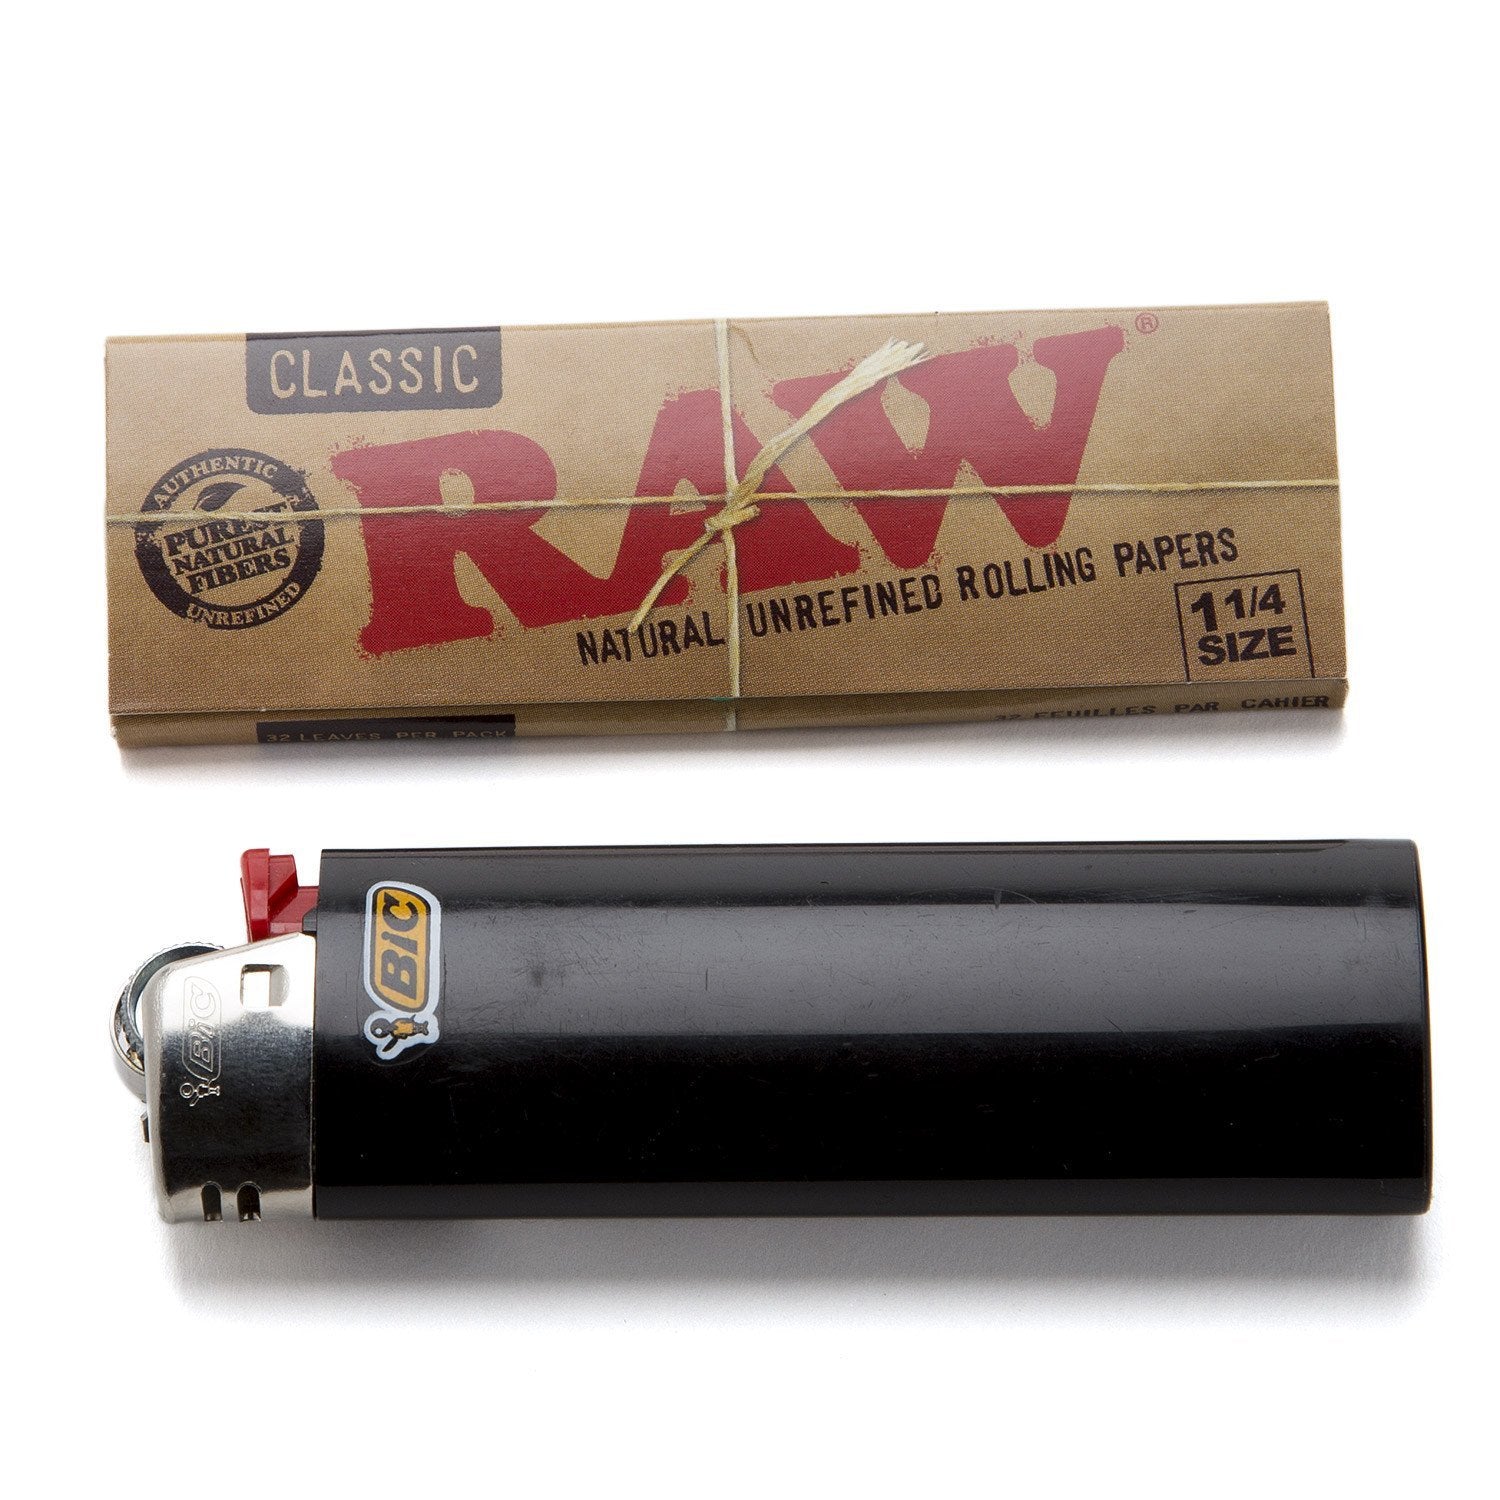 RAW Original Tips – R420 Supplies